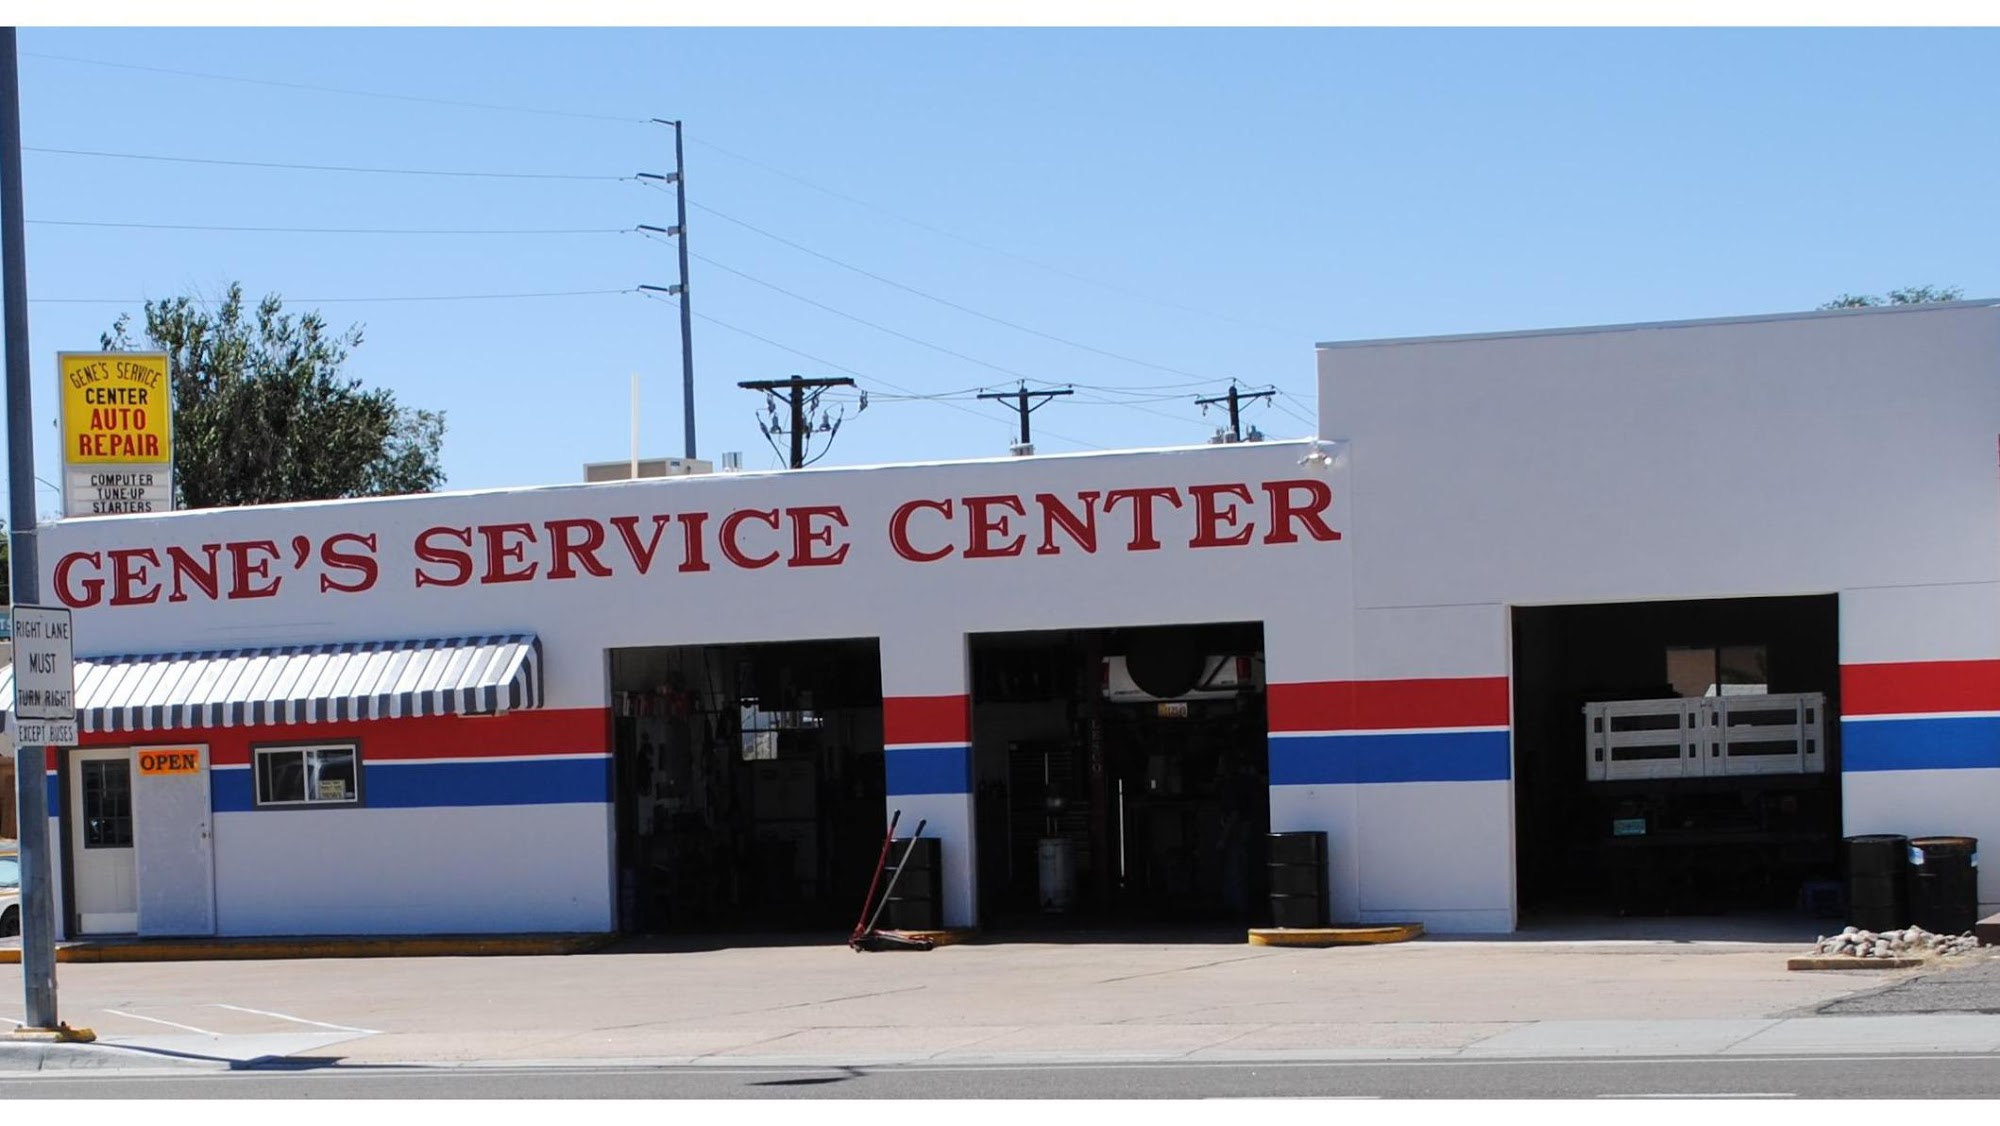 Gene's Service Center